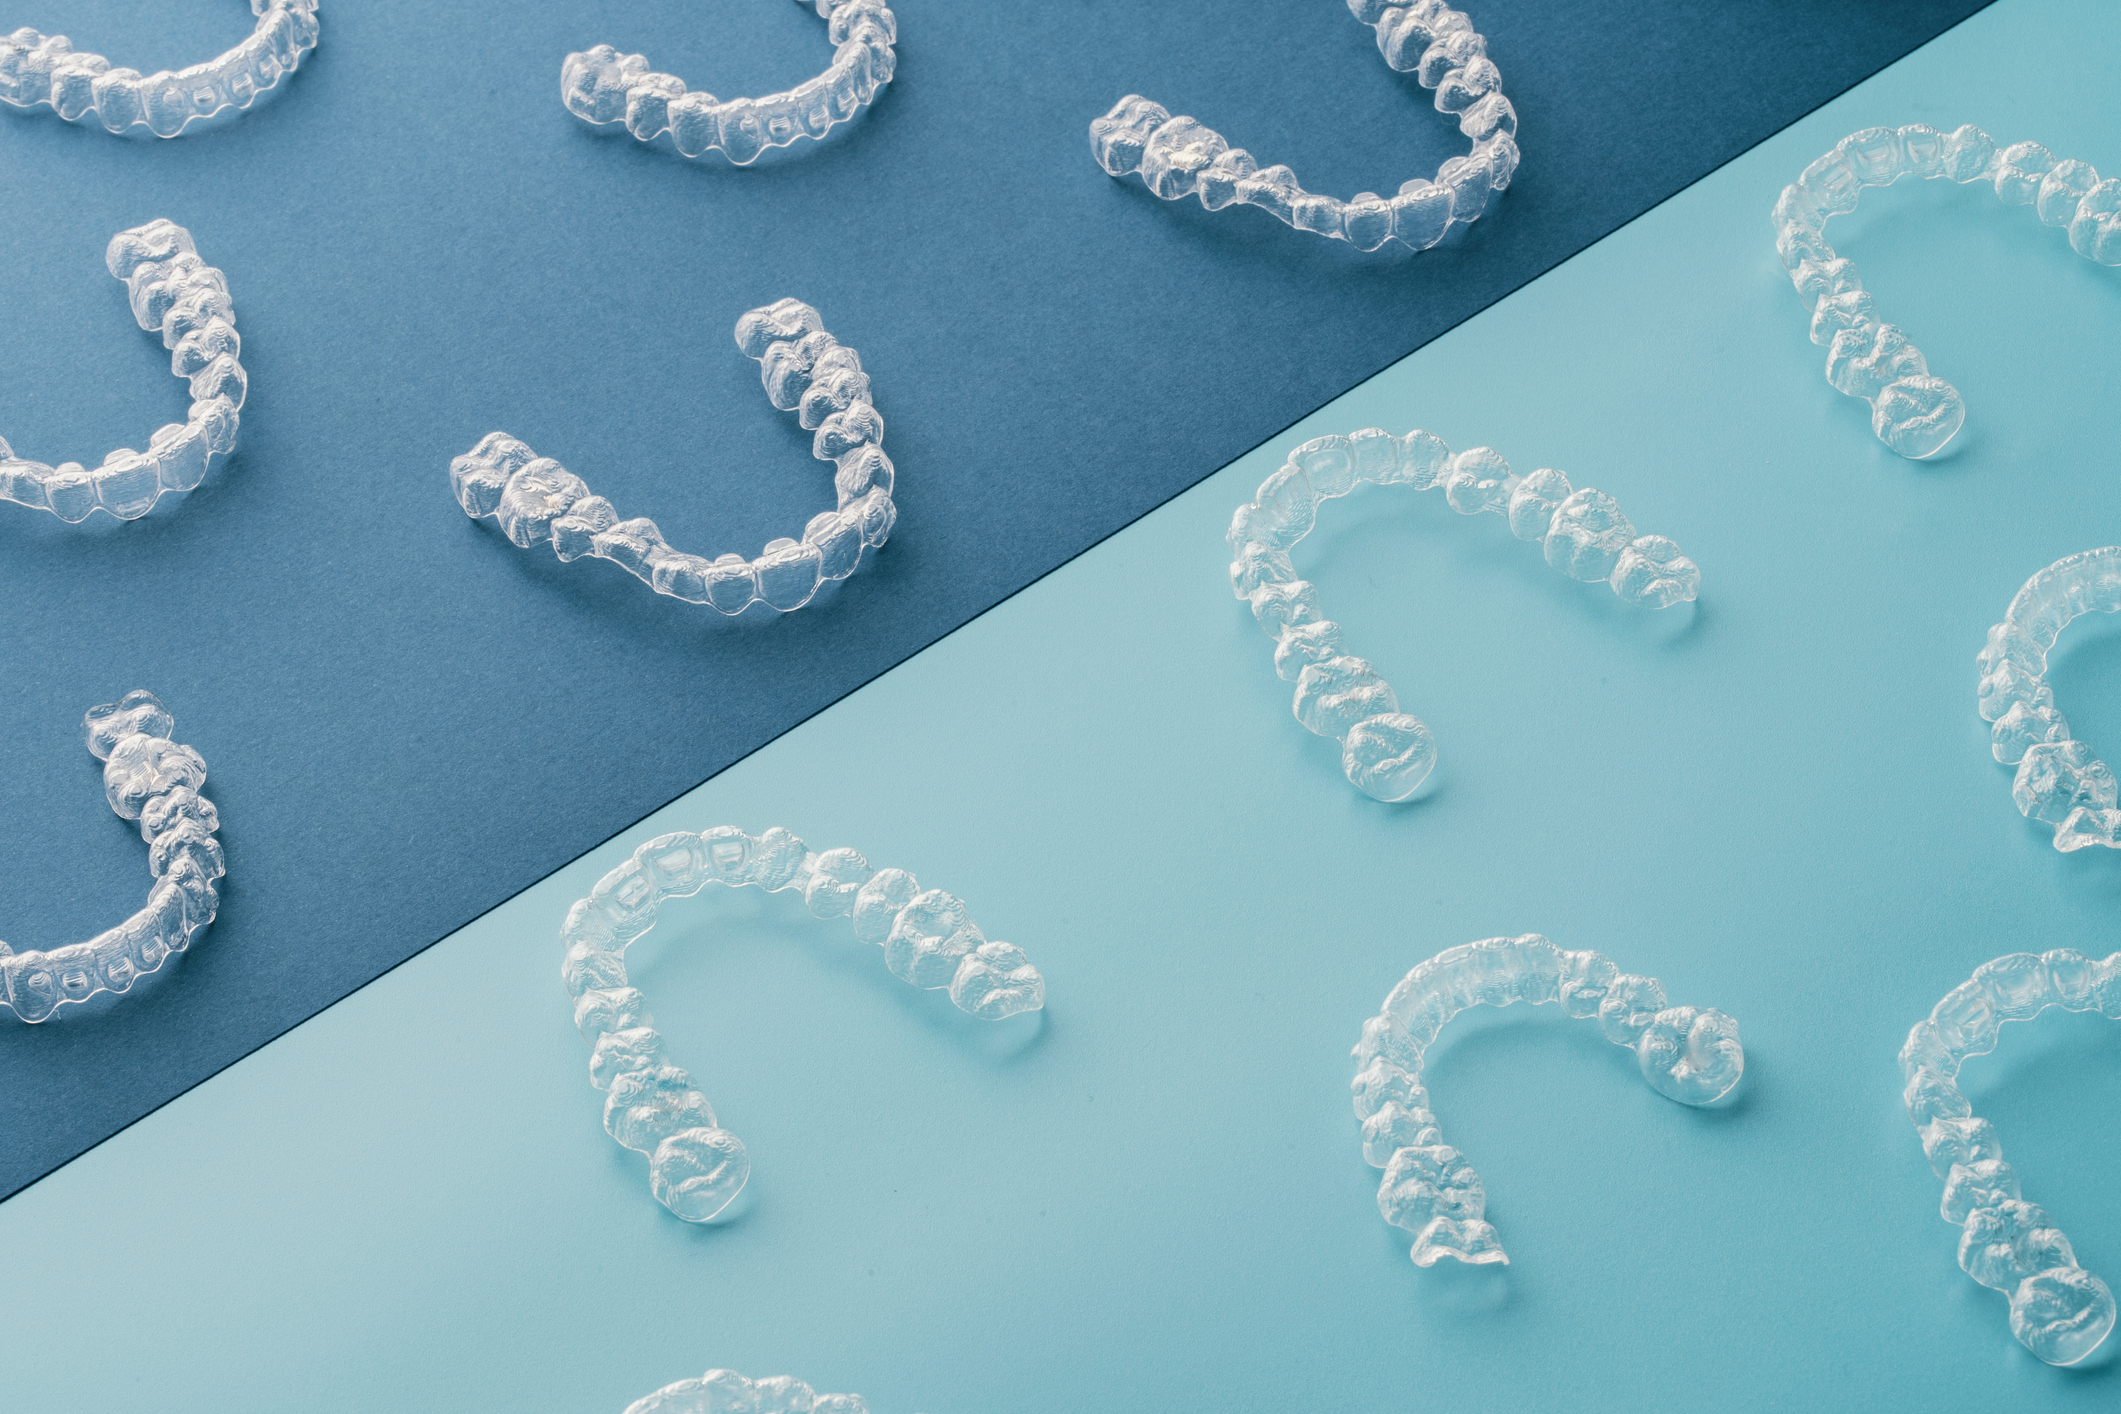 A batch of Prodways 3D printed dental aligners.